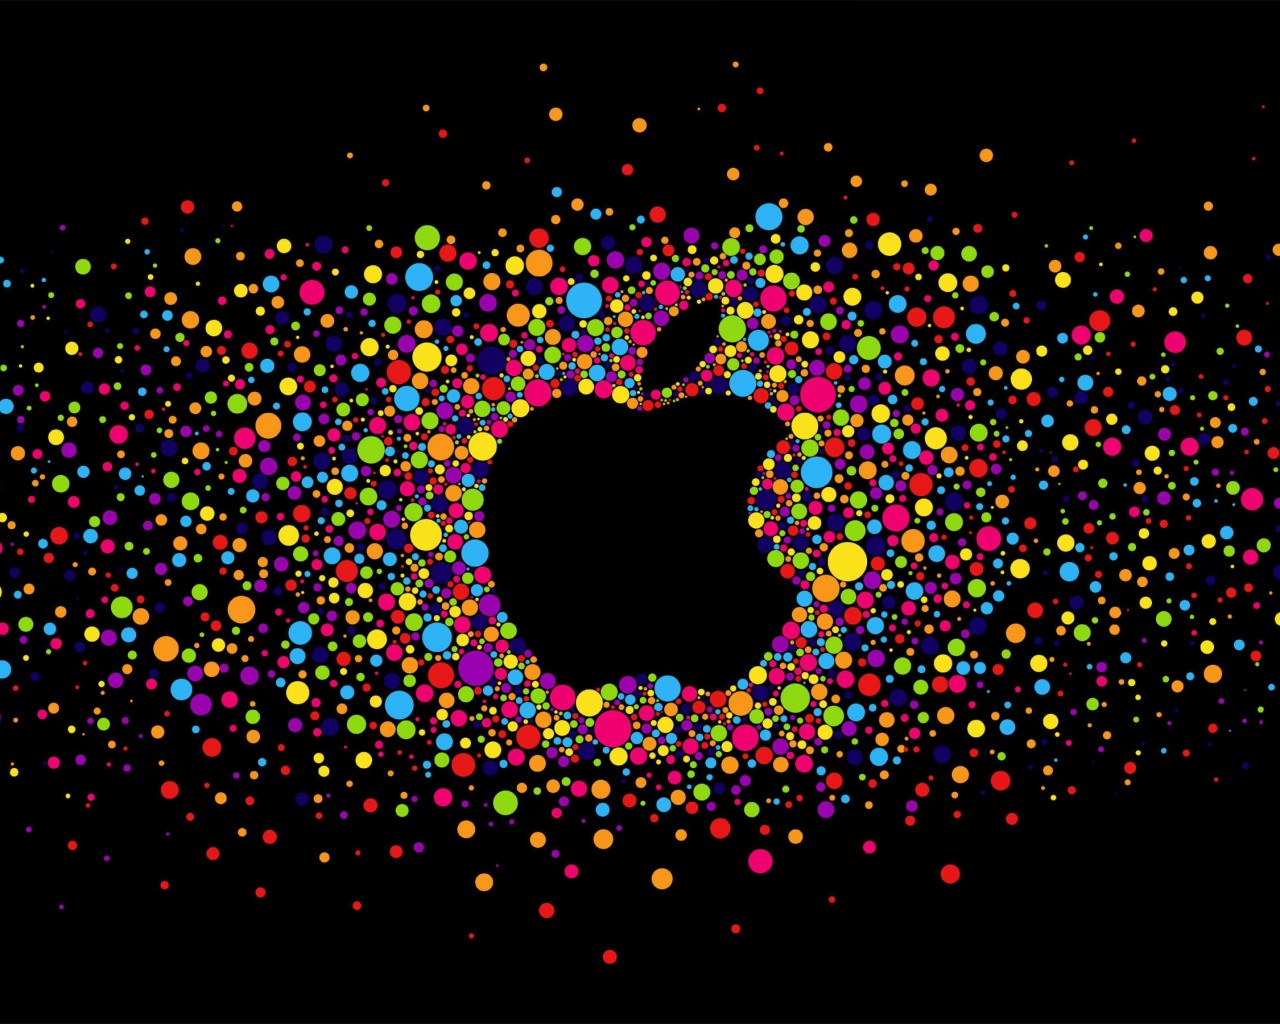 Black Apple Logo Particles Wallpaper for Desktop 1280x1024